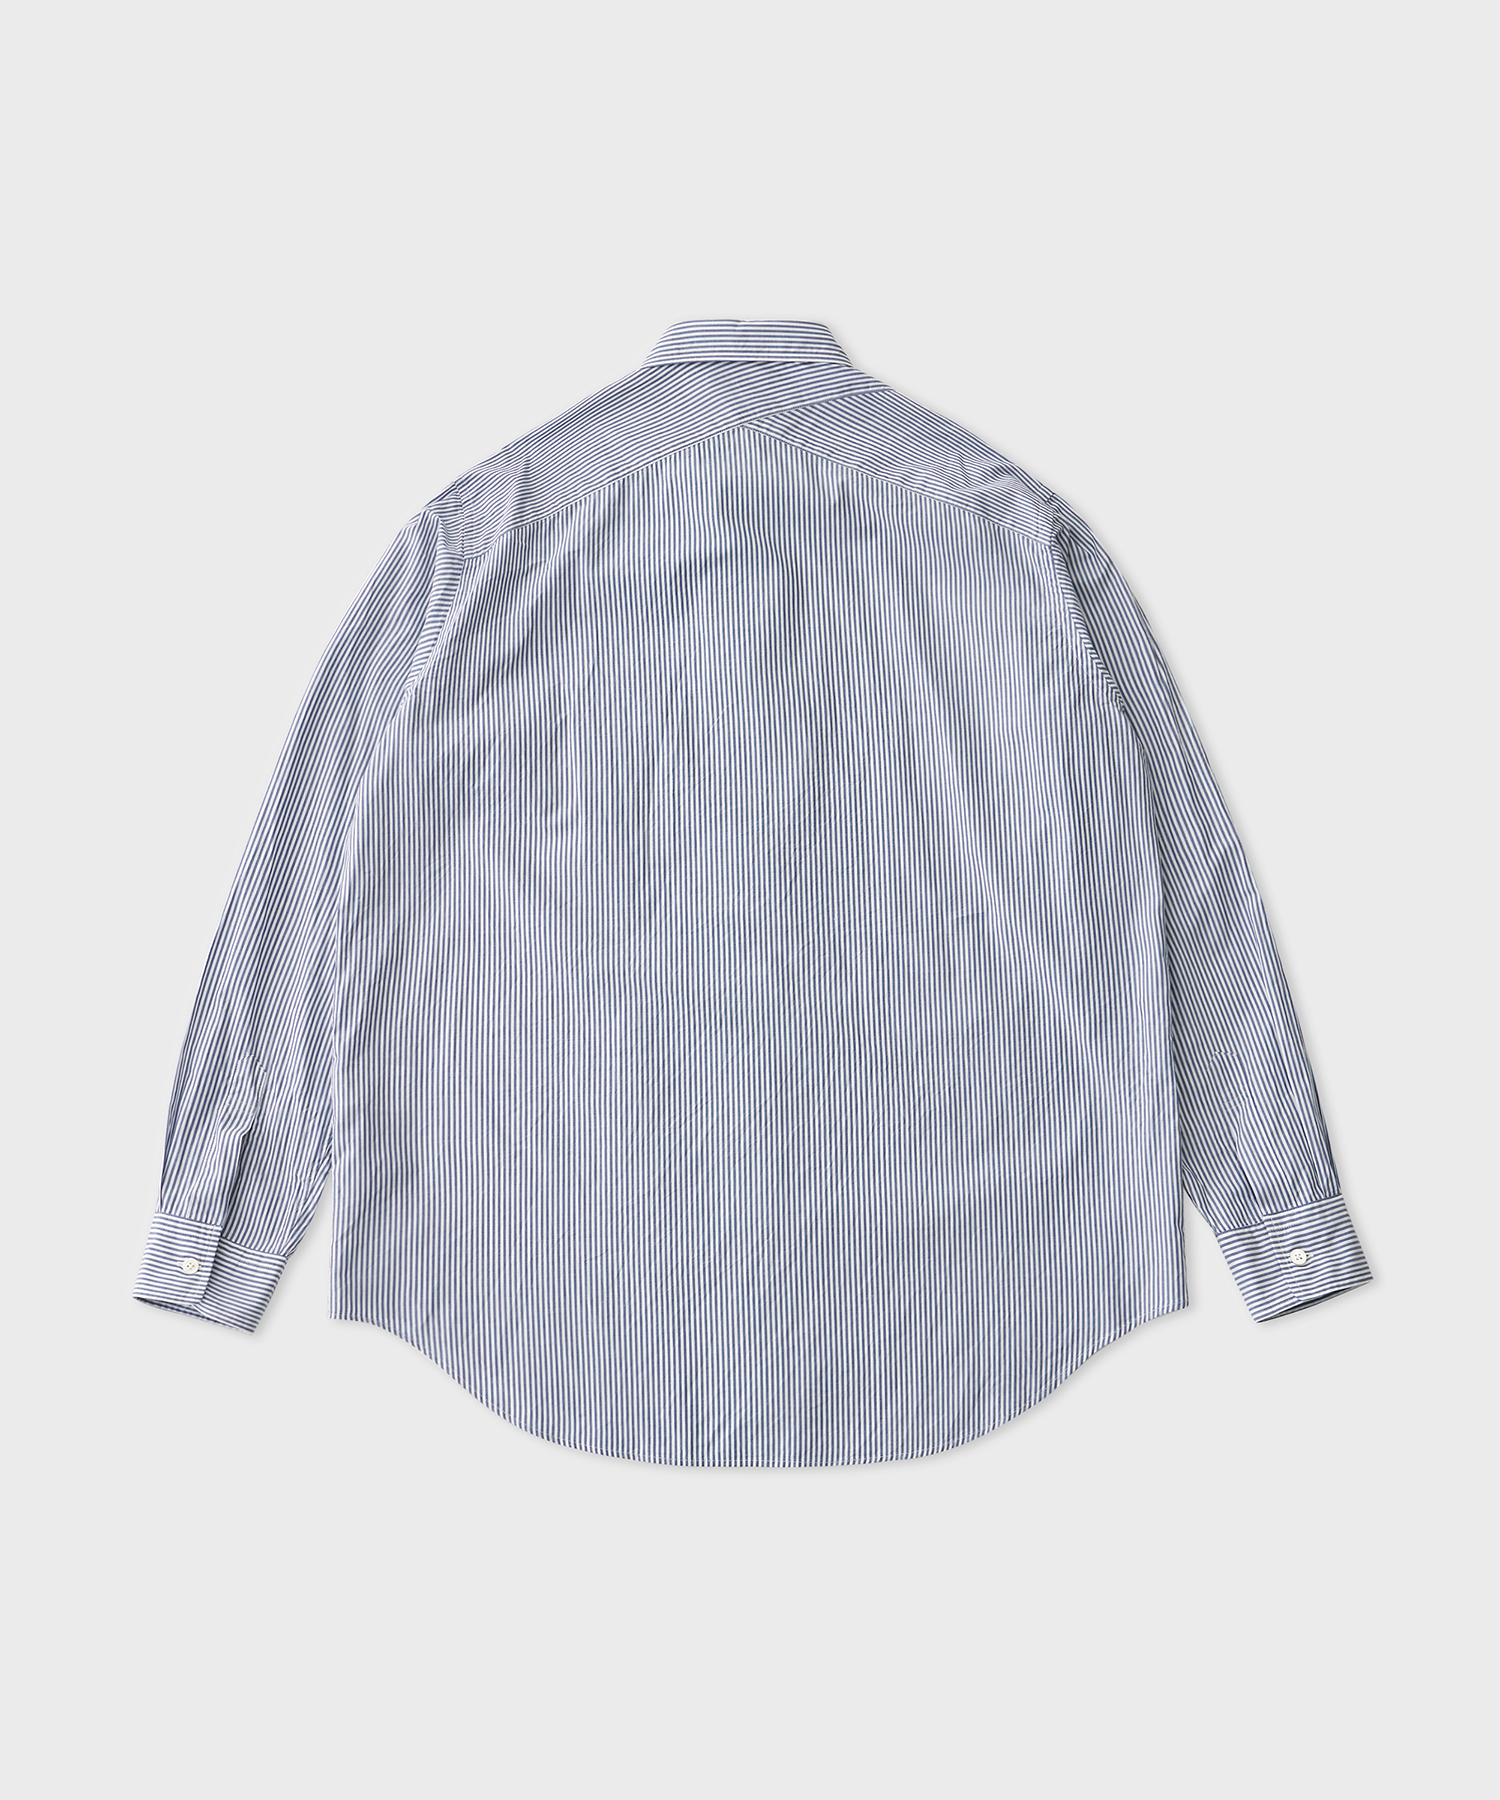 Asic Stripe Overlaid Shirt (Navy Blue)